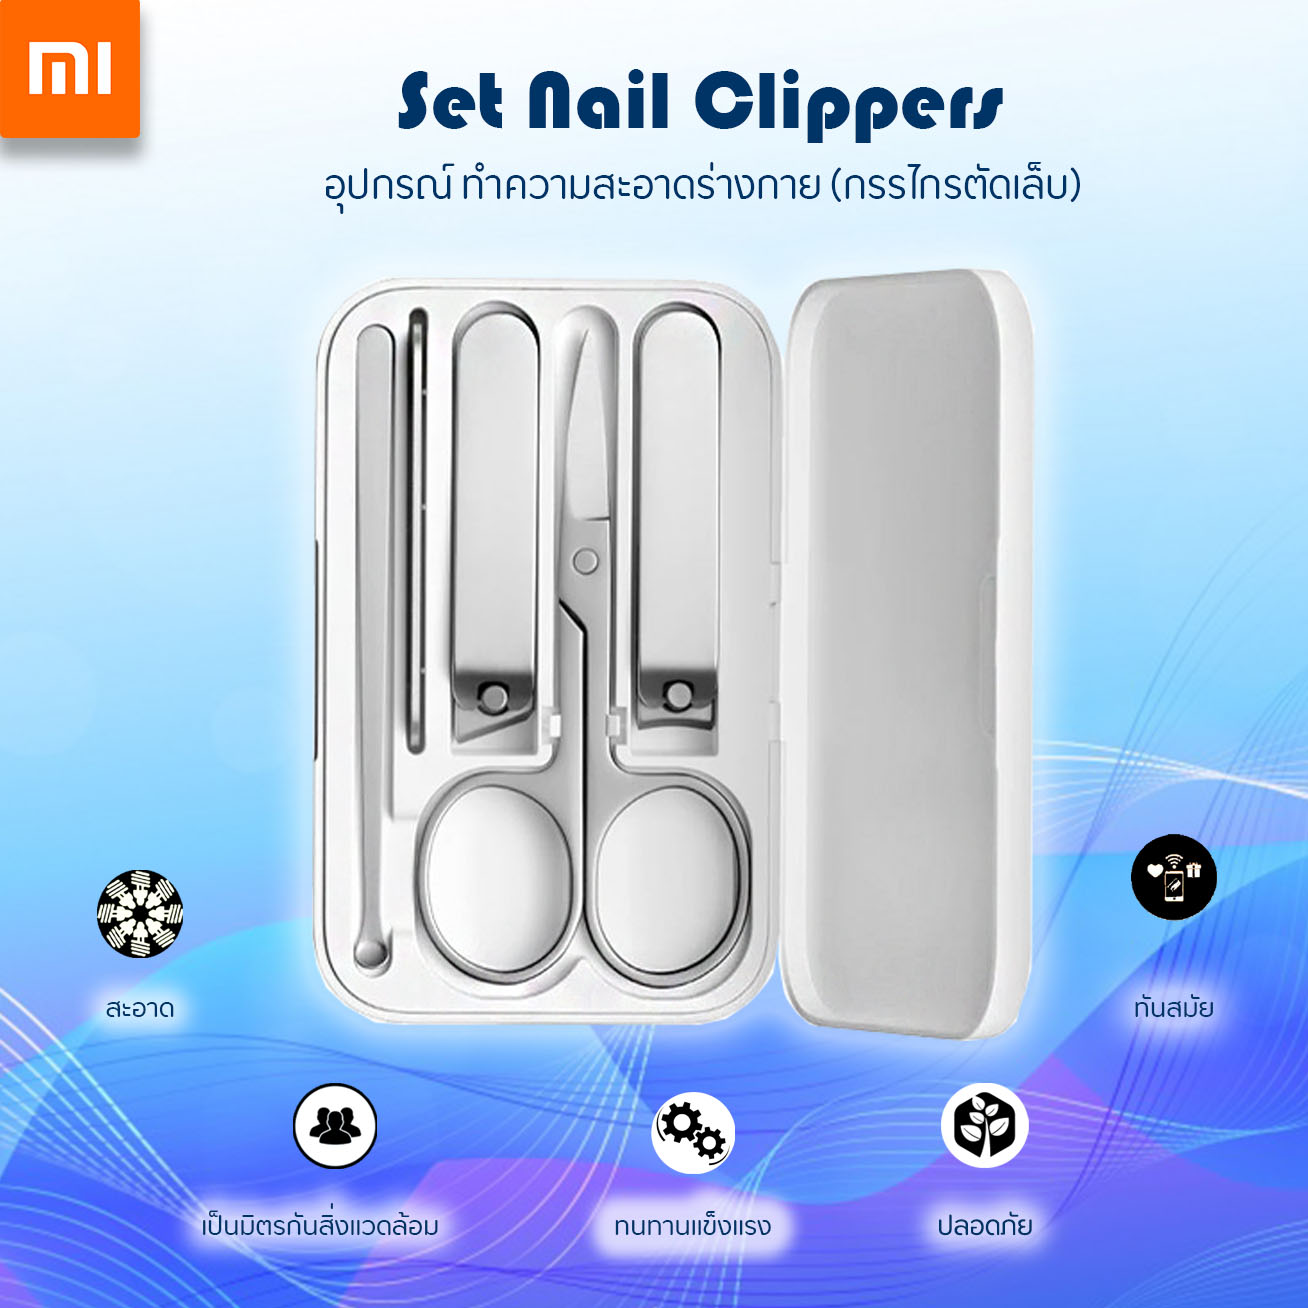 Xiaomi Mijia Nail Clipper Set ชุดกรรไกรตัดเล็บสแตนเลสพร้อมกล่องเก็บ Stainless Steel Nail Clippers Set Manicure Nail Trimming Tool Kit